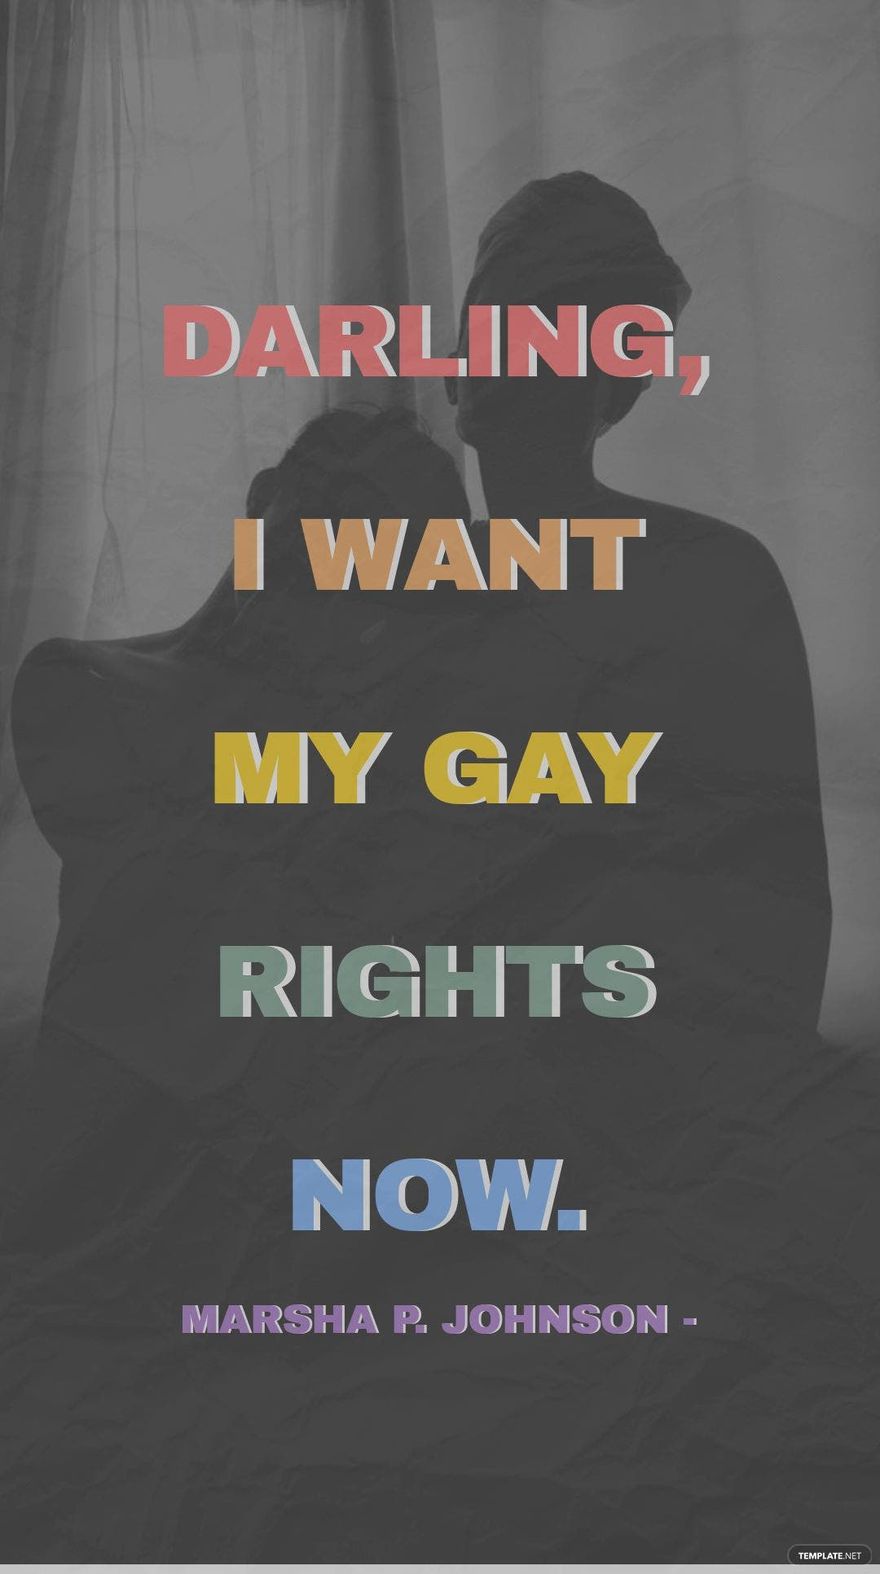 Free Marsha P. Johnson - Darling, I want my gay rights now.